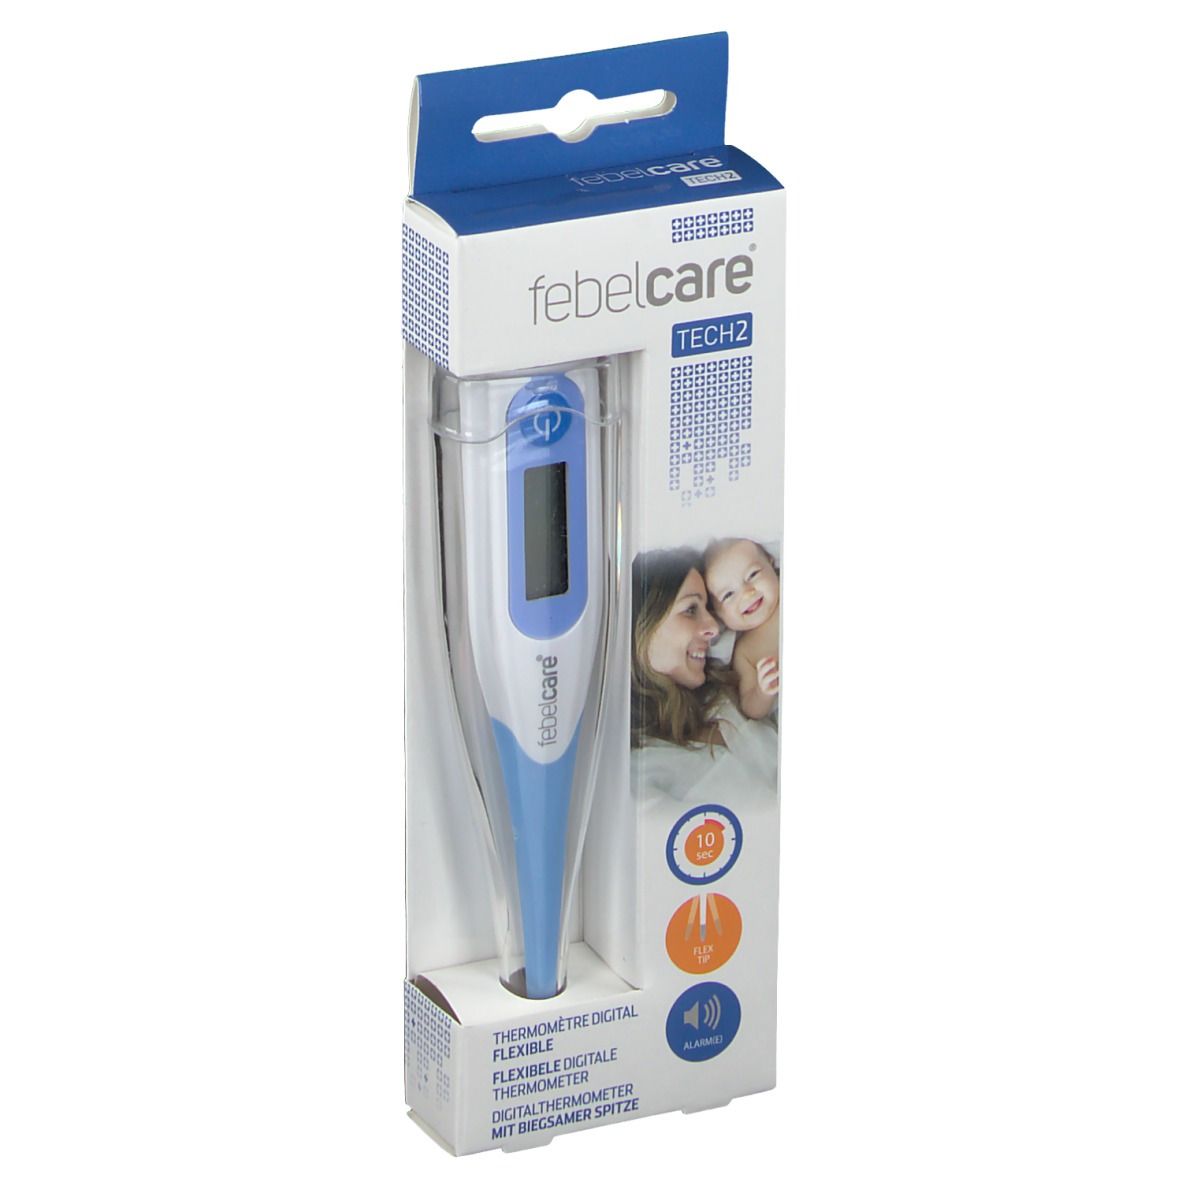 febelcare® Tech2 Thermomètre Digital Flexible